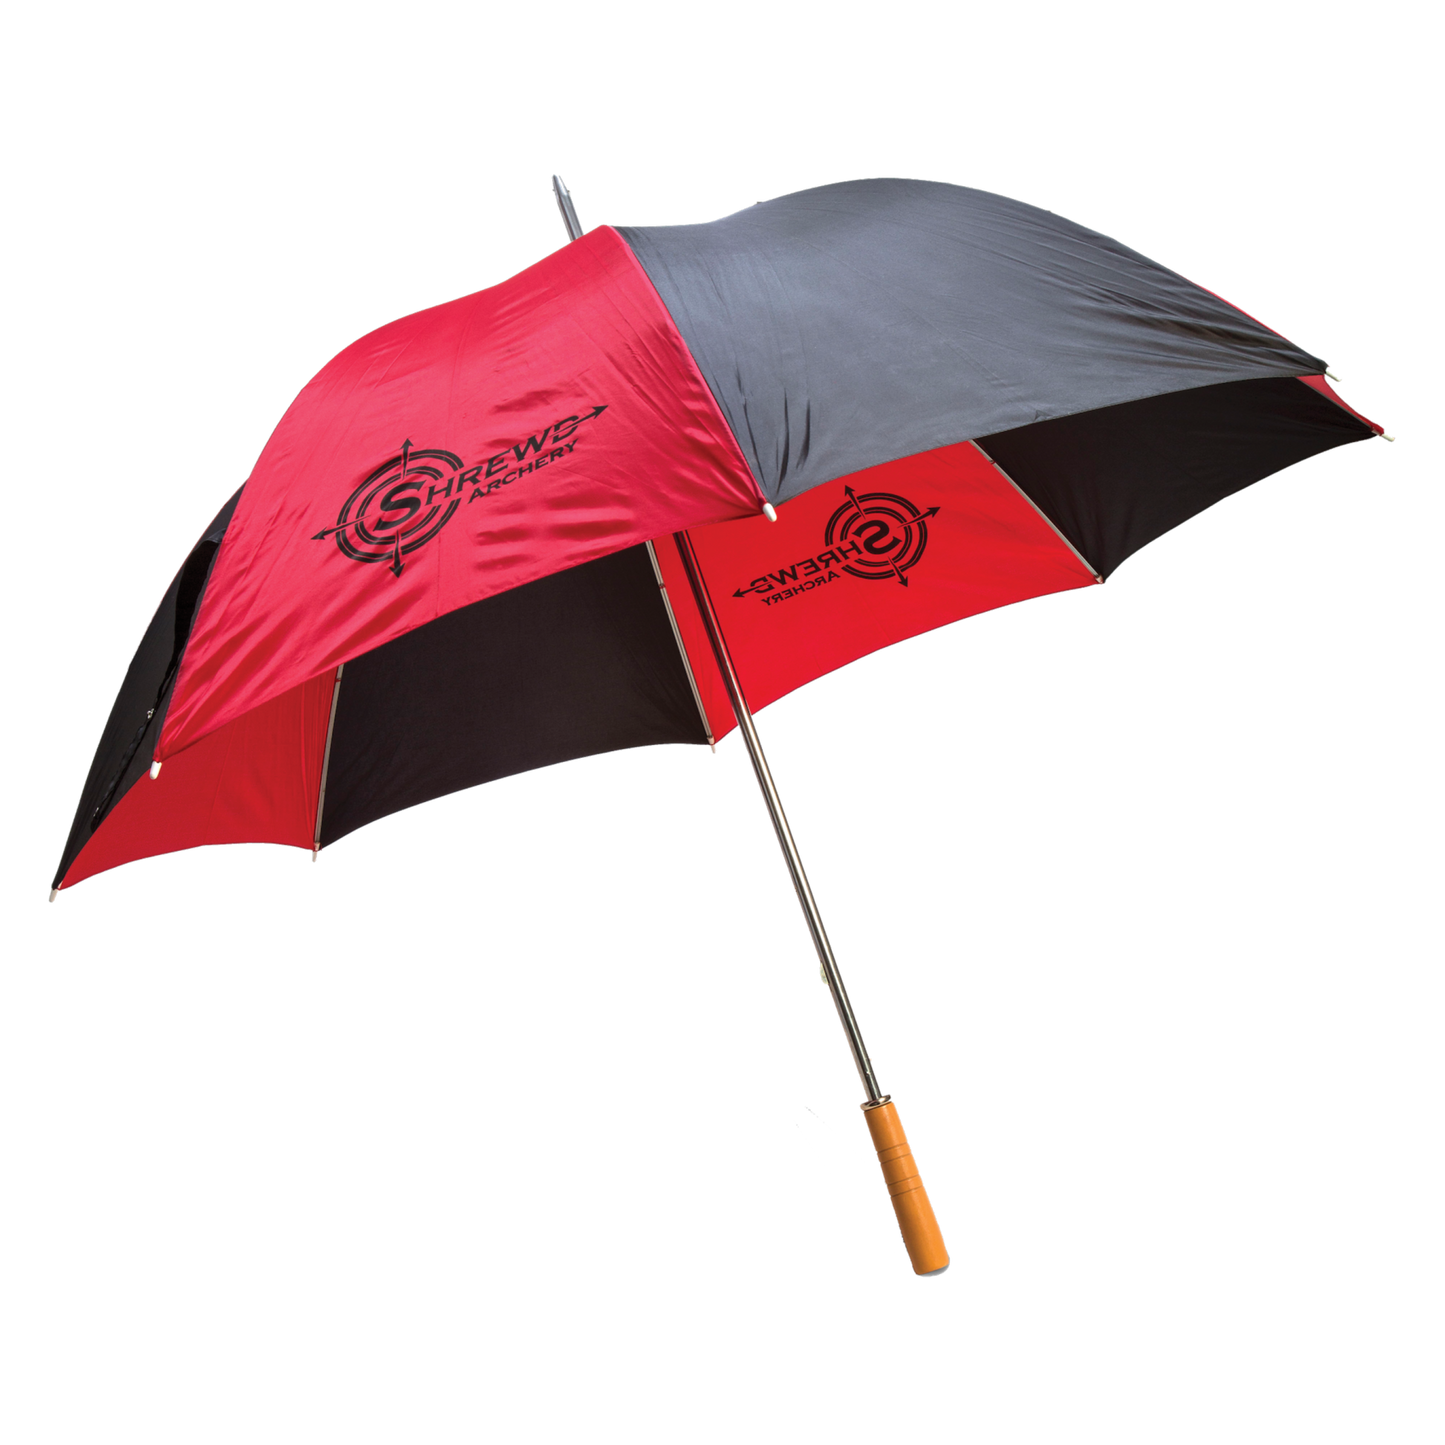 Shrewd Archery Umbrella